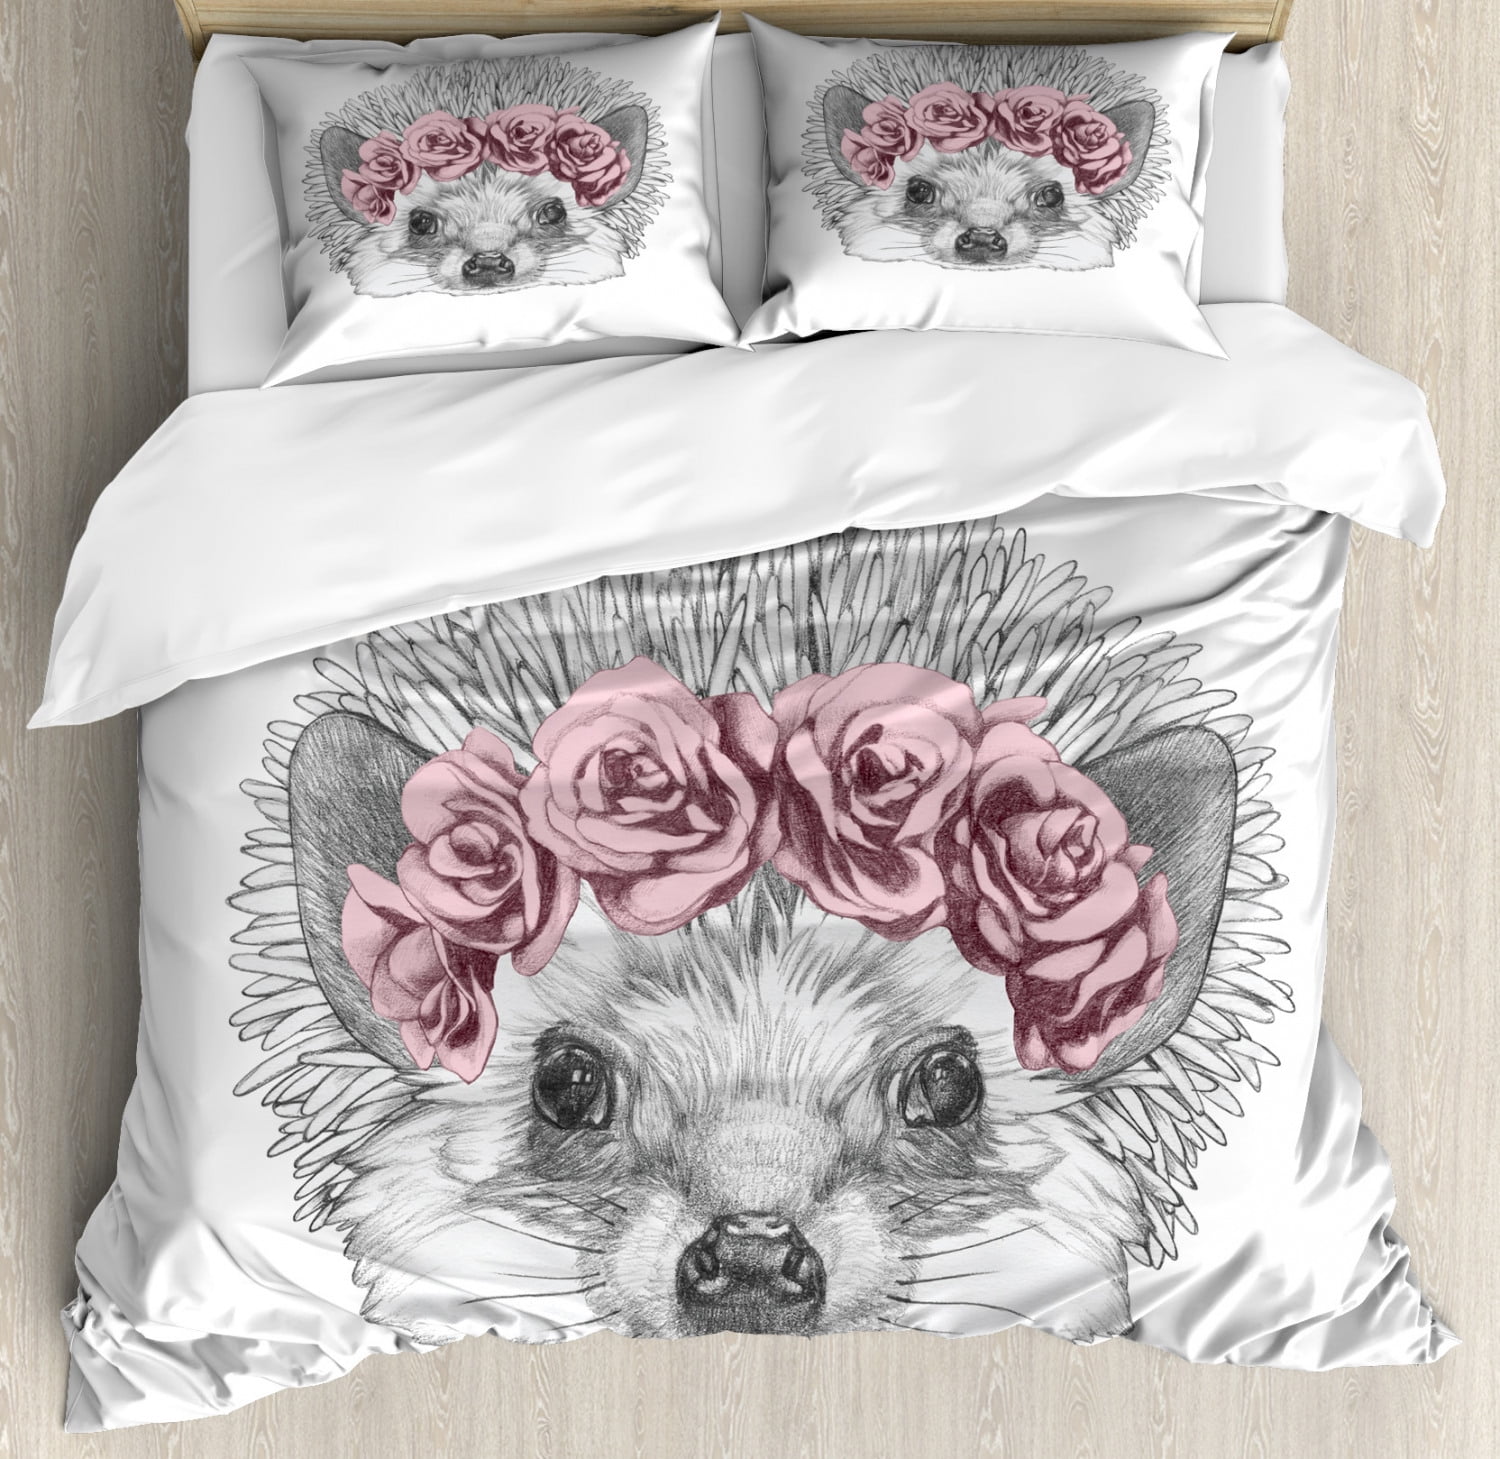 Details about   Romantic Rose Pillow Sham Decorative Pillowcase 3 Sizes Bedroom Decor Ambesonne 